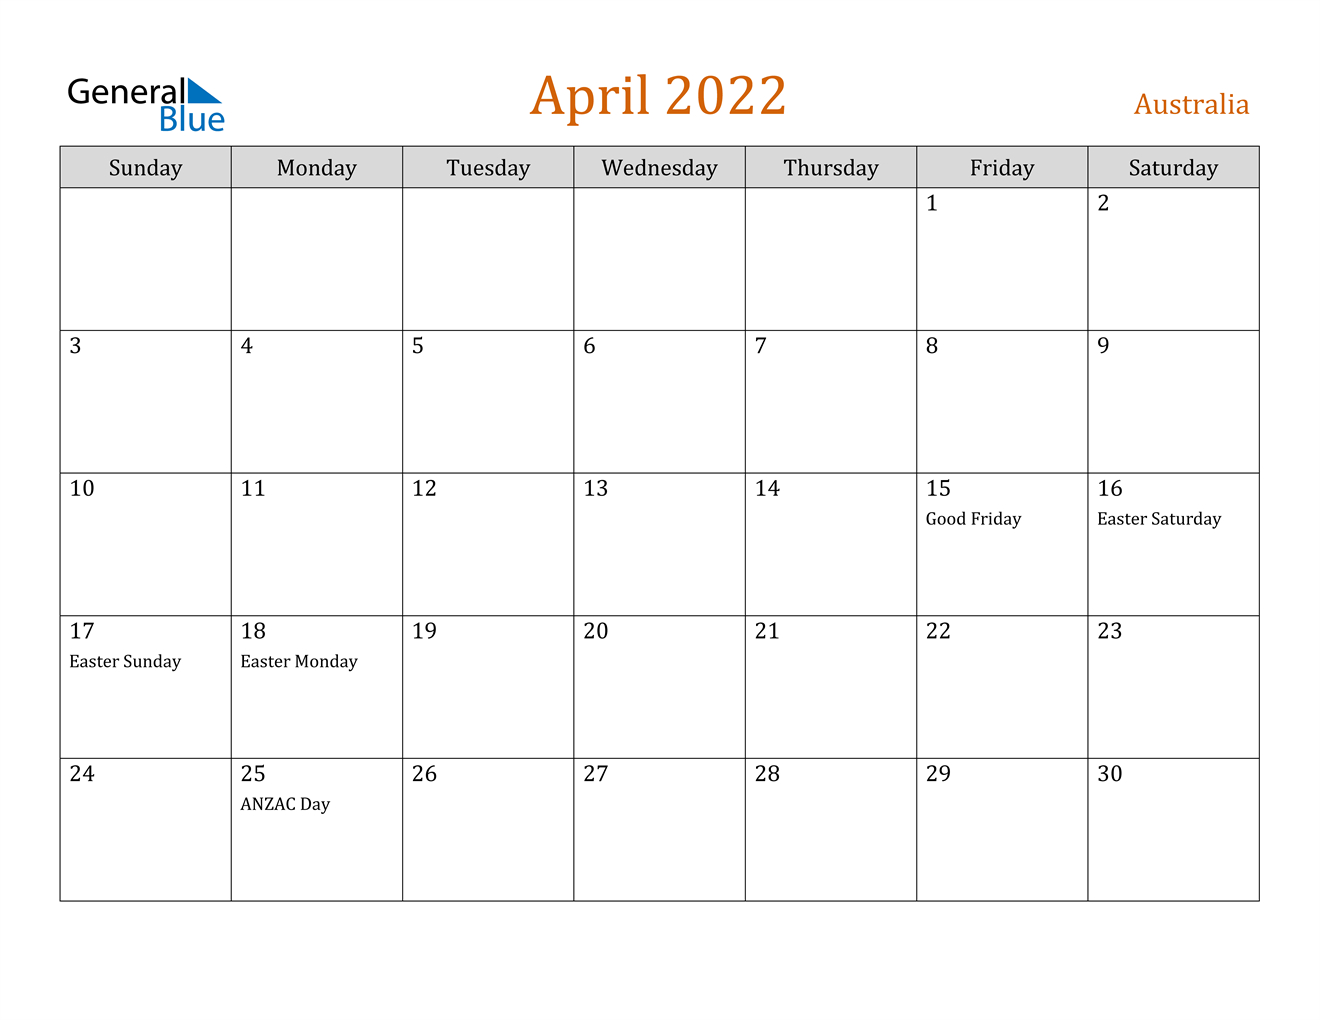 April 2022 Calendar - Australia